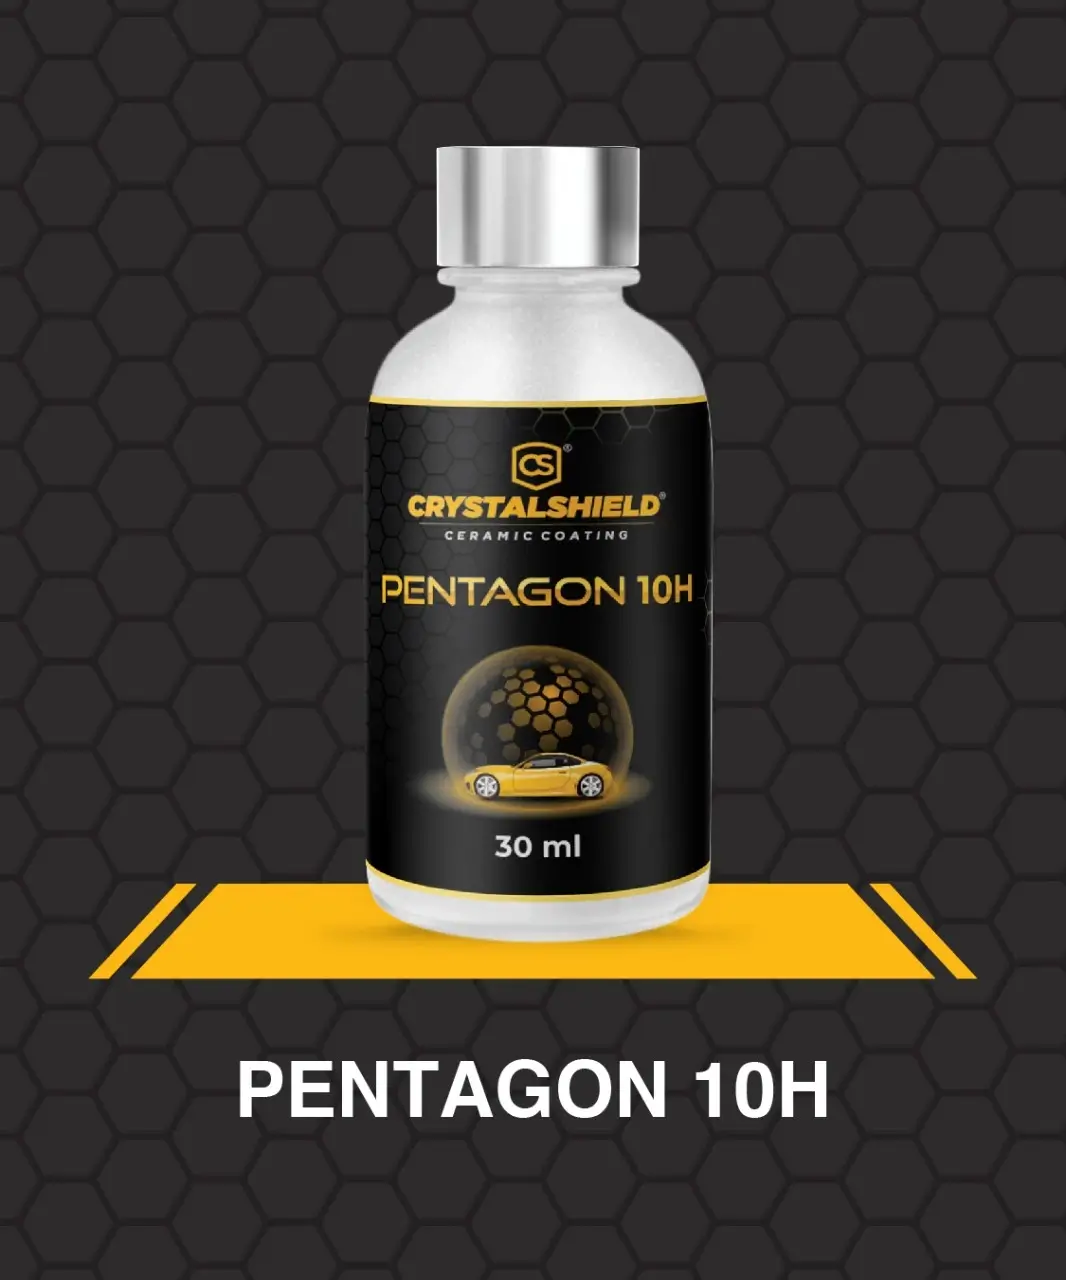 Pentagon 10H